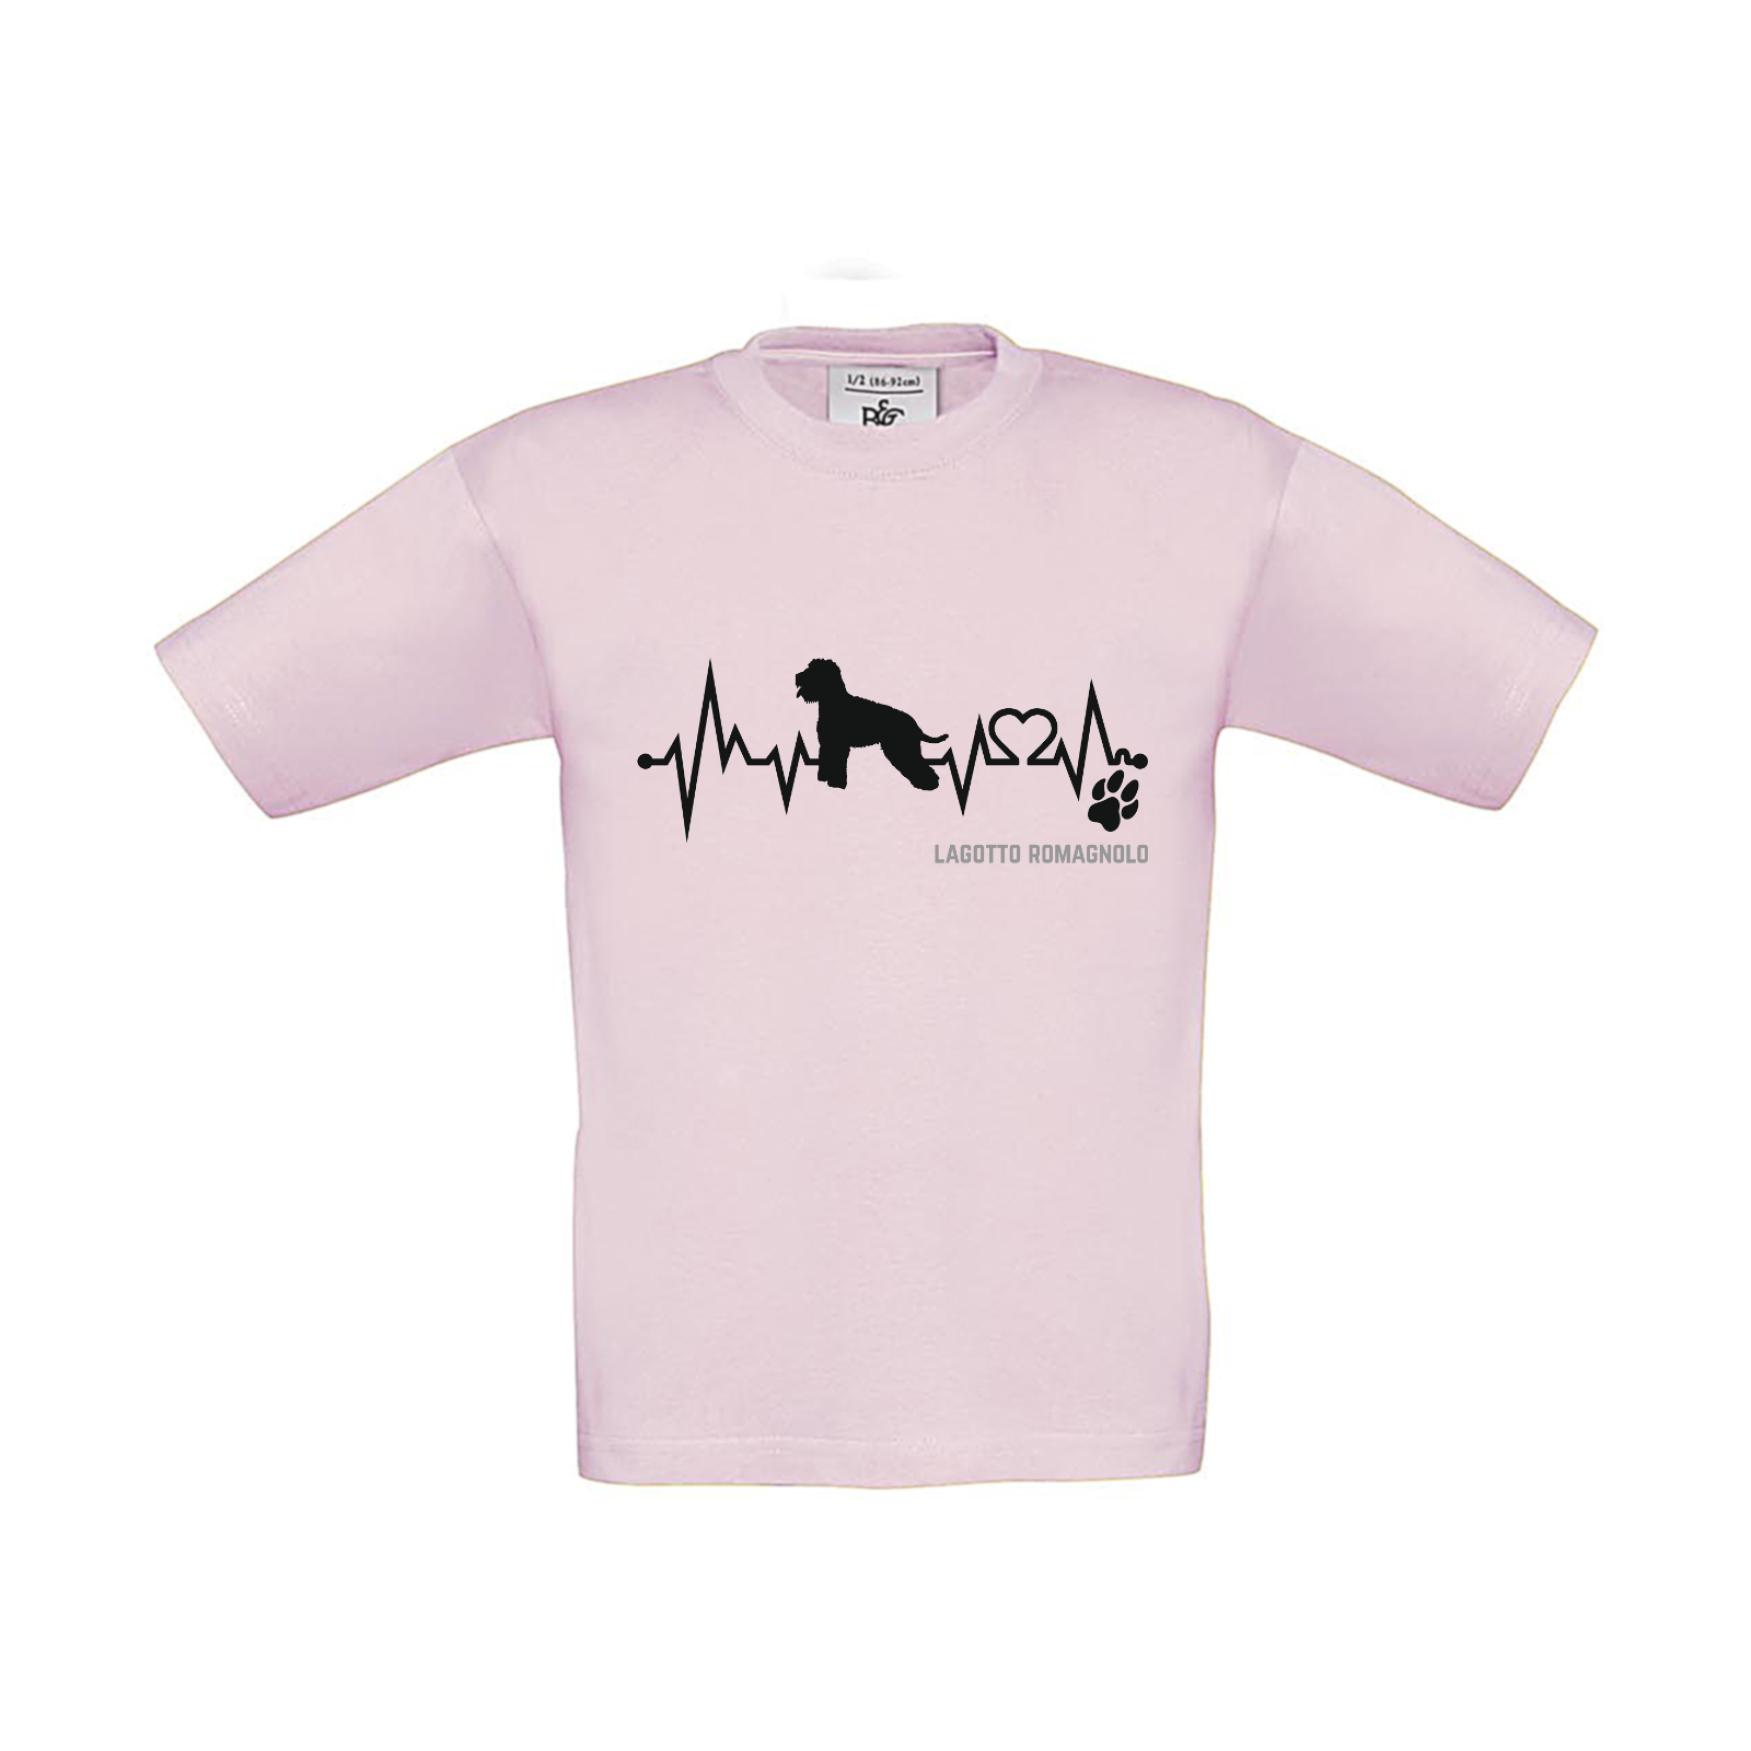 T-Shirt Kinder Hunde - Lagotto Romagnolo Herzstromkurve